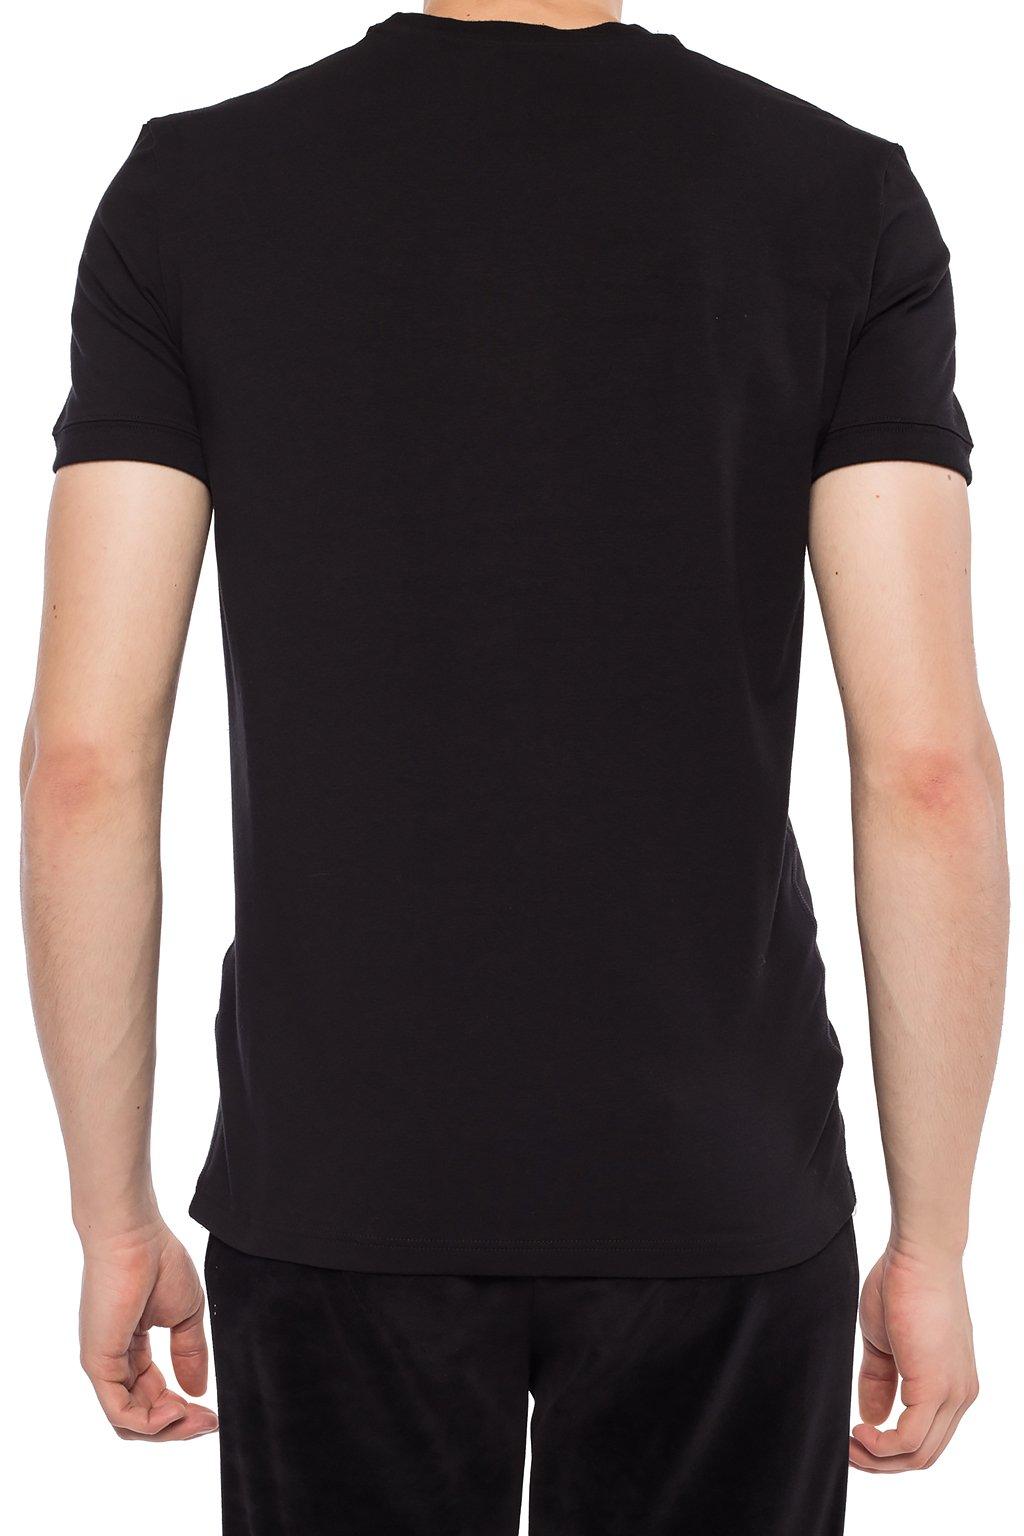 Dolce & Gabbana Logo-embroidered T-shirt in Black for Men - Lyst